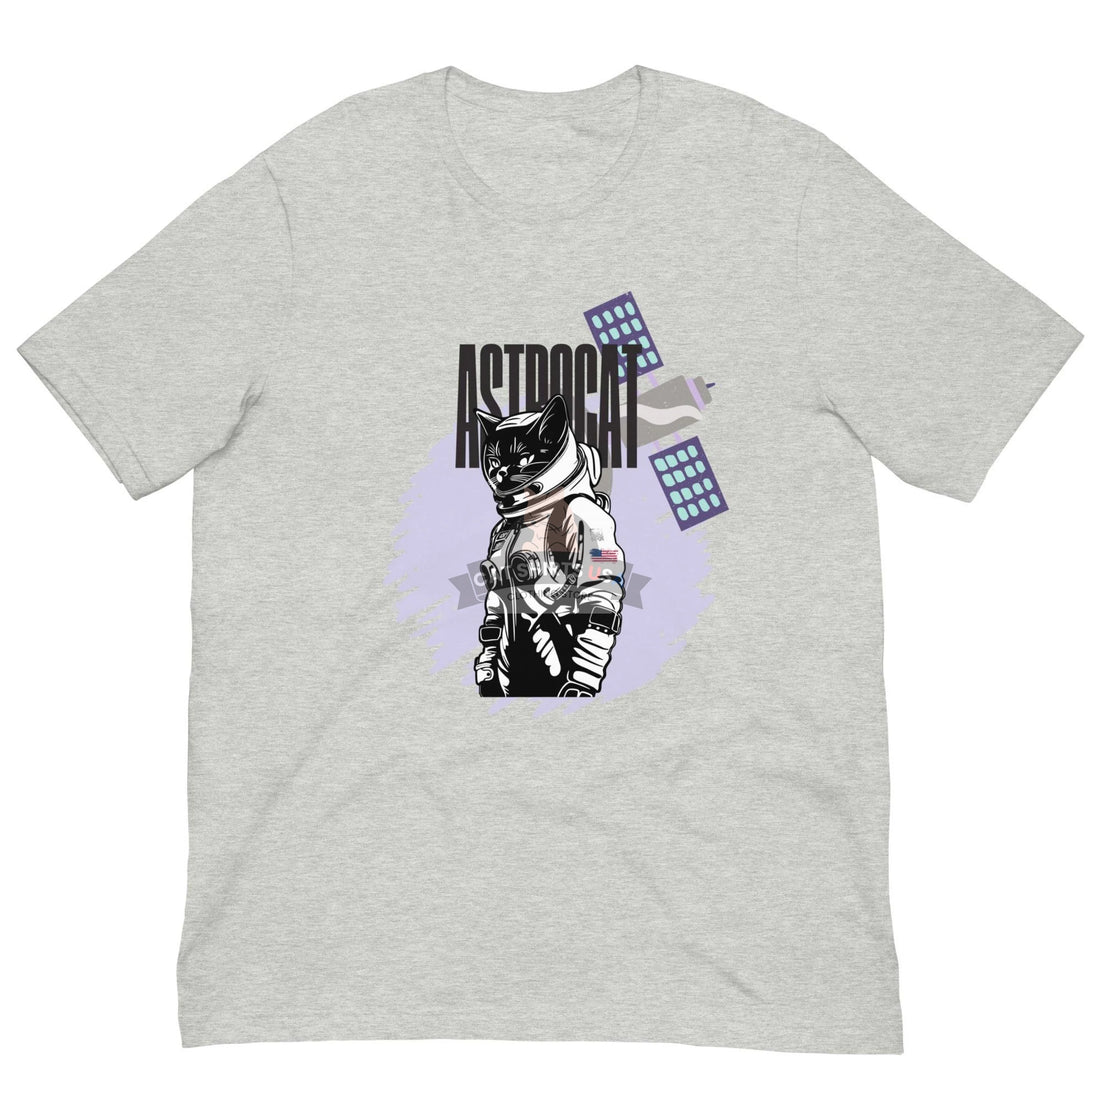 Astrocat Cat Shirt - Cat Shirts USA